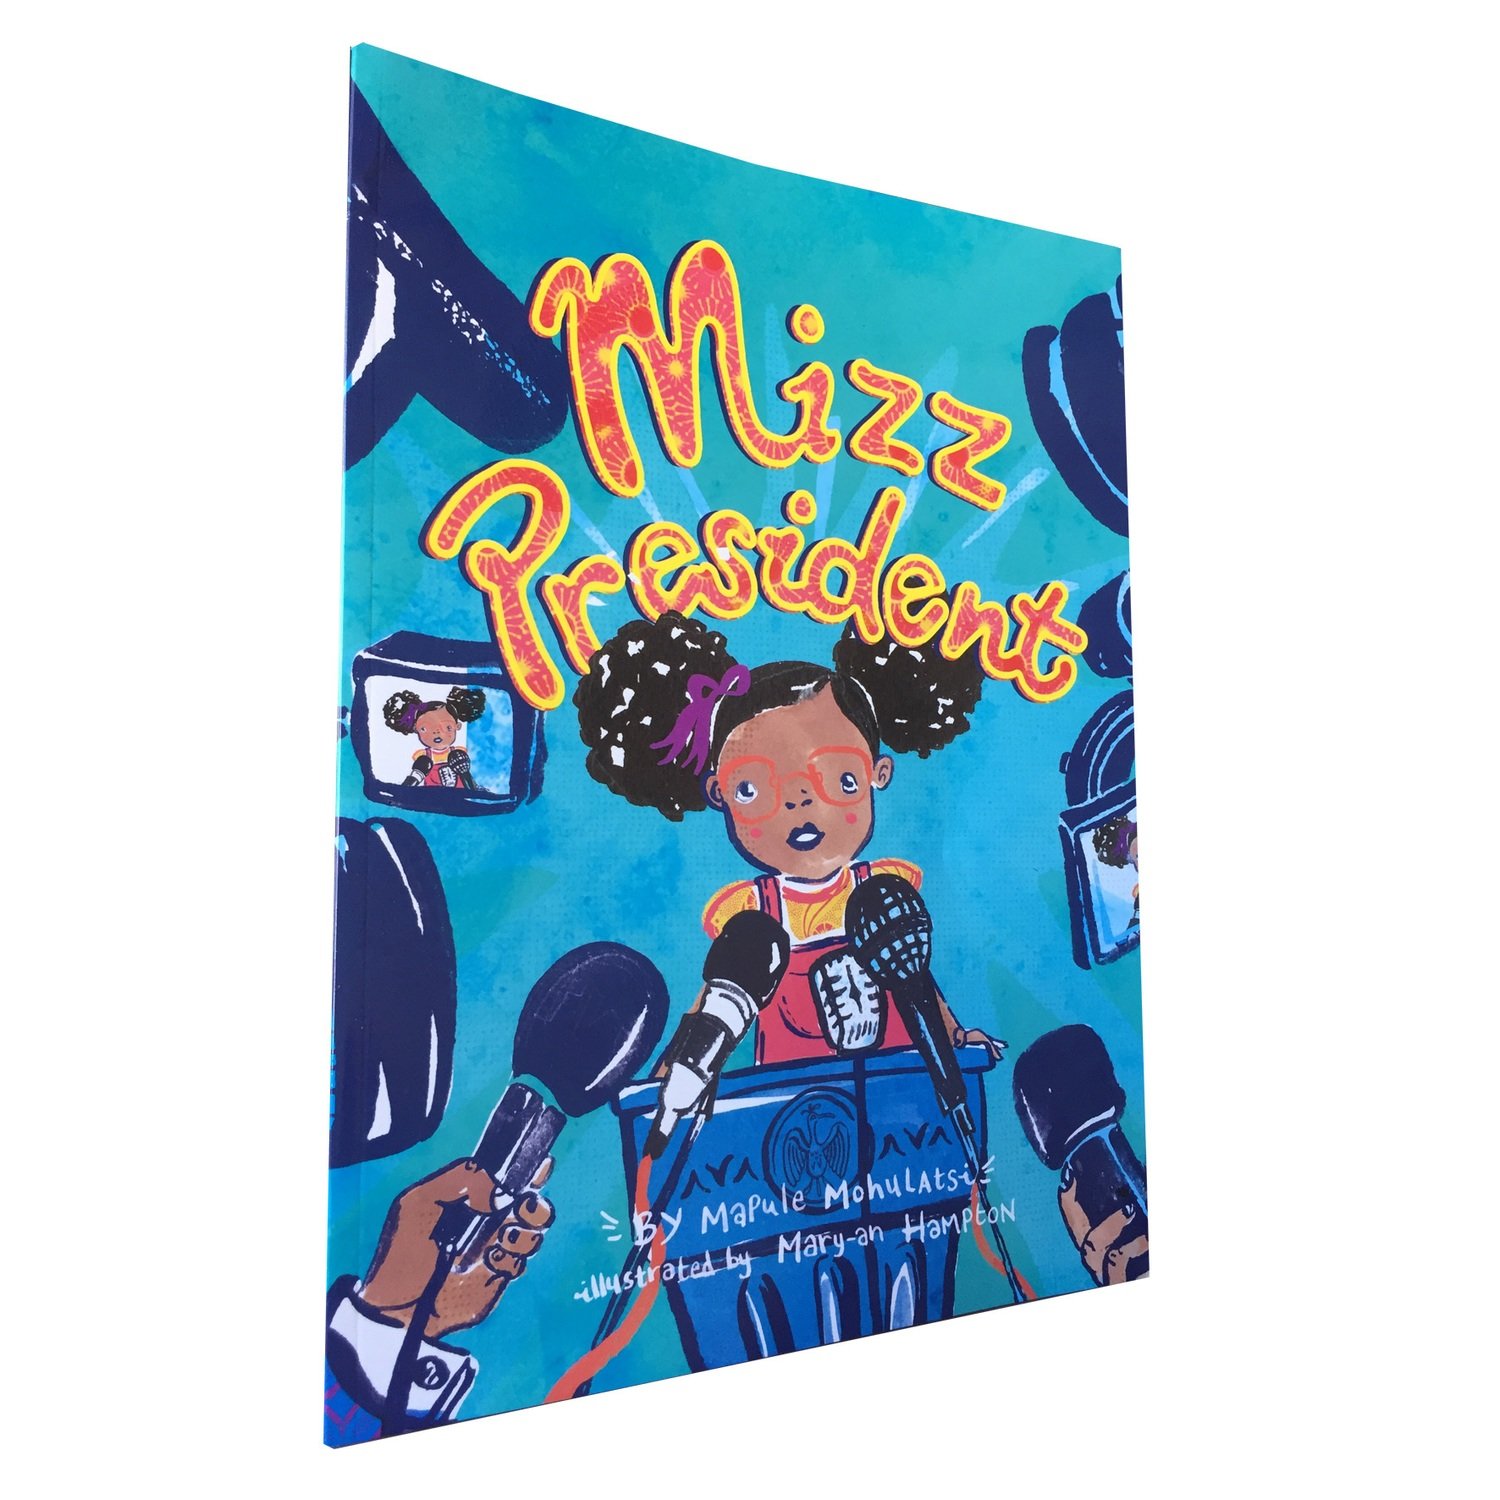 Mizz President by Mapule Mohulatsie (Every Child Books, 2018)